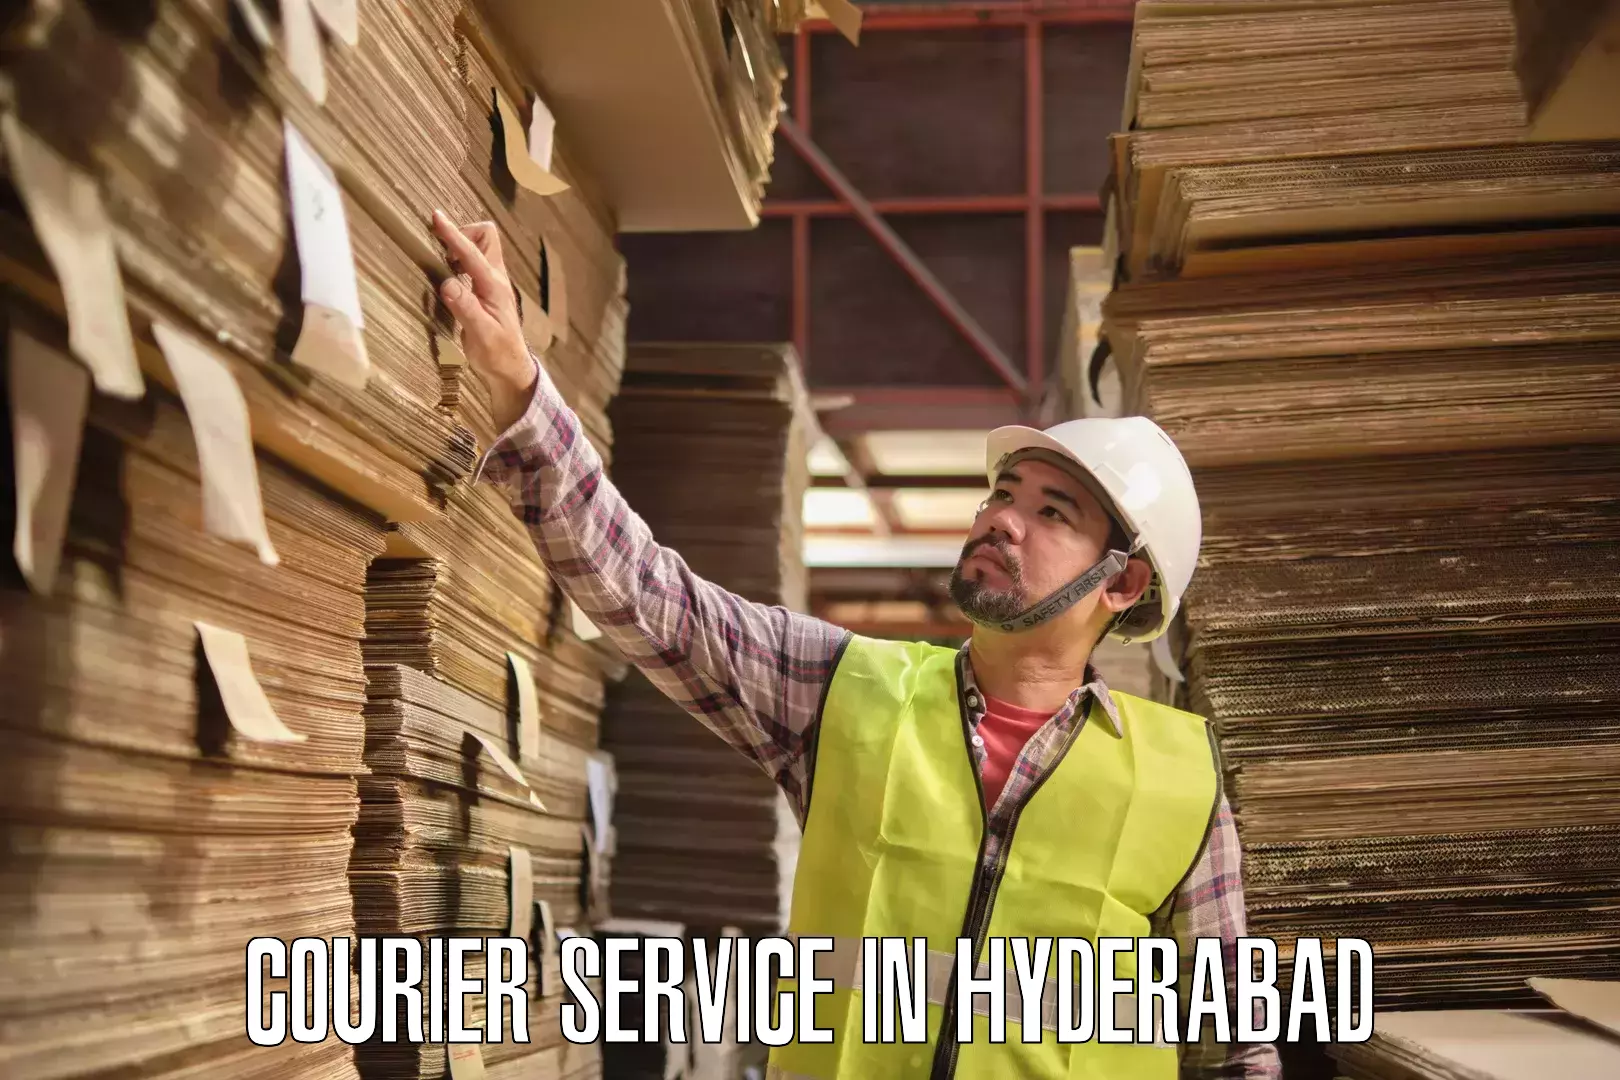 Efficient freight service in Hyderabad